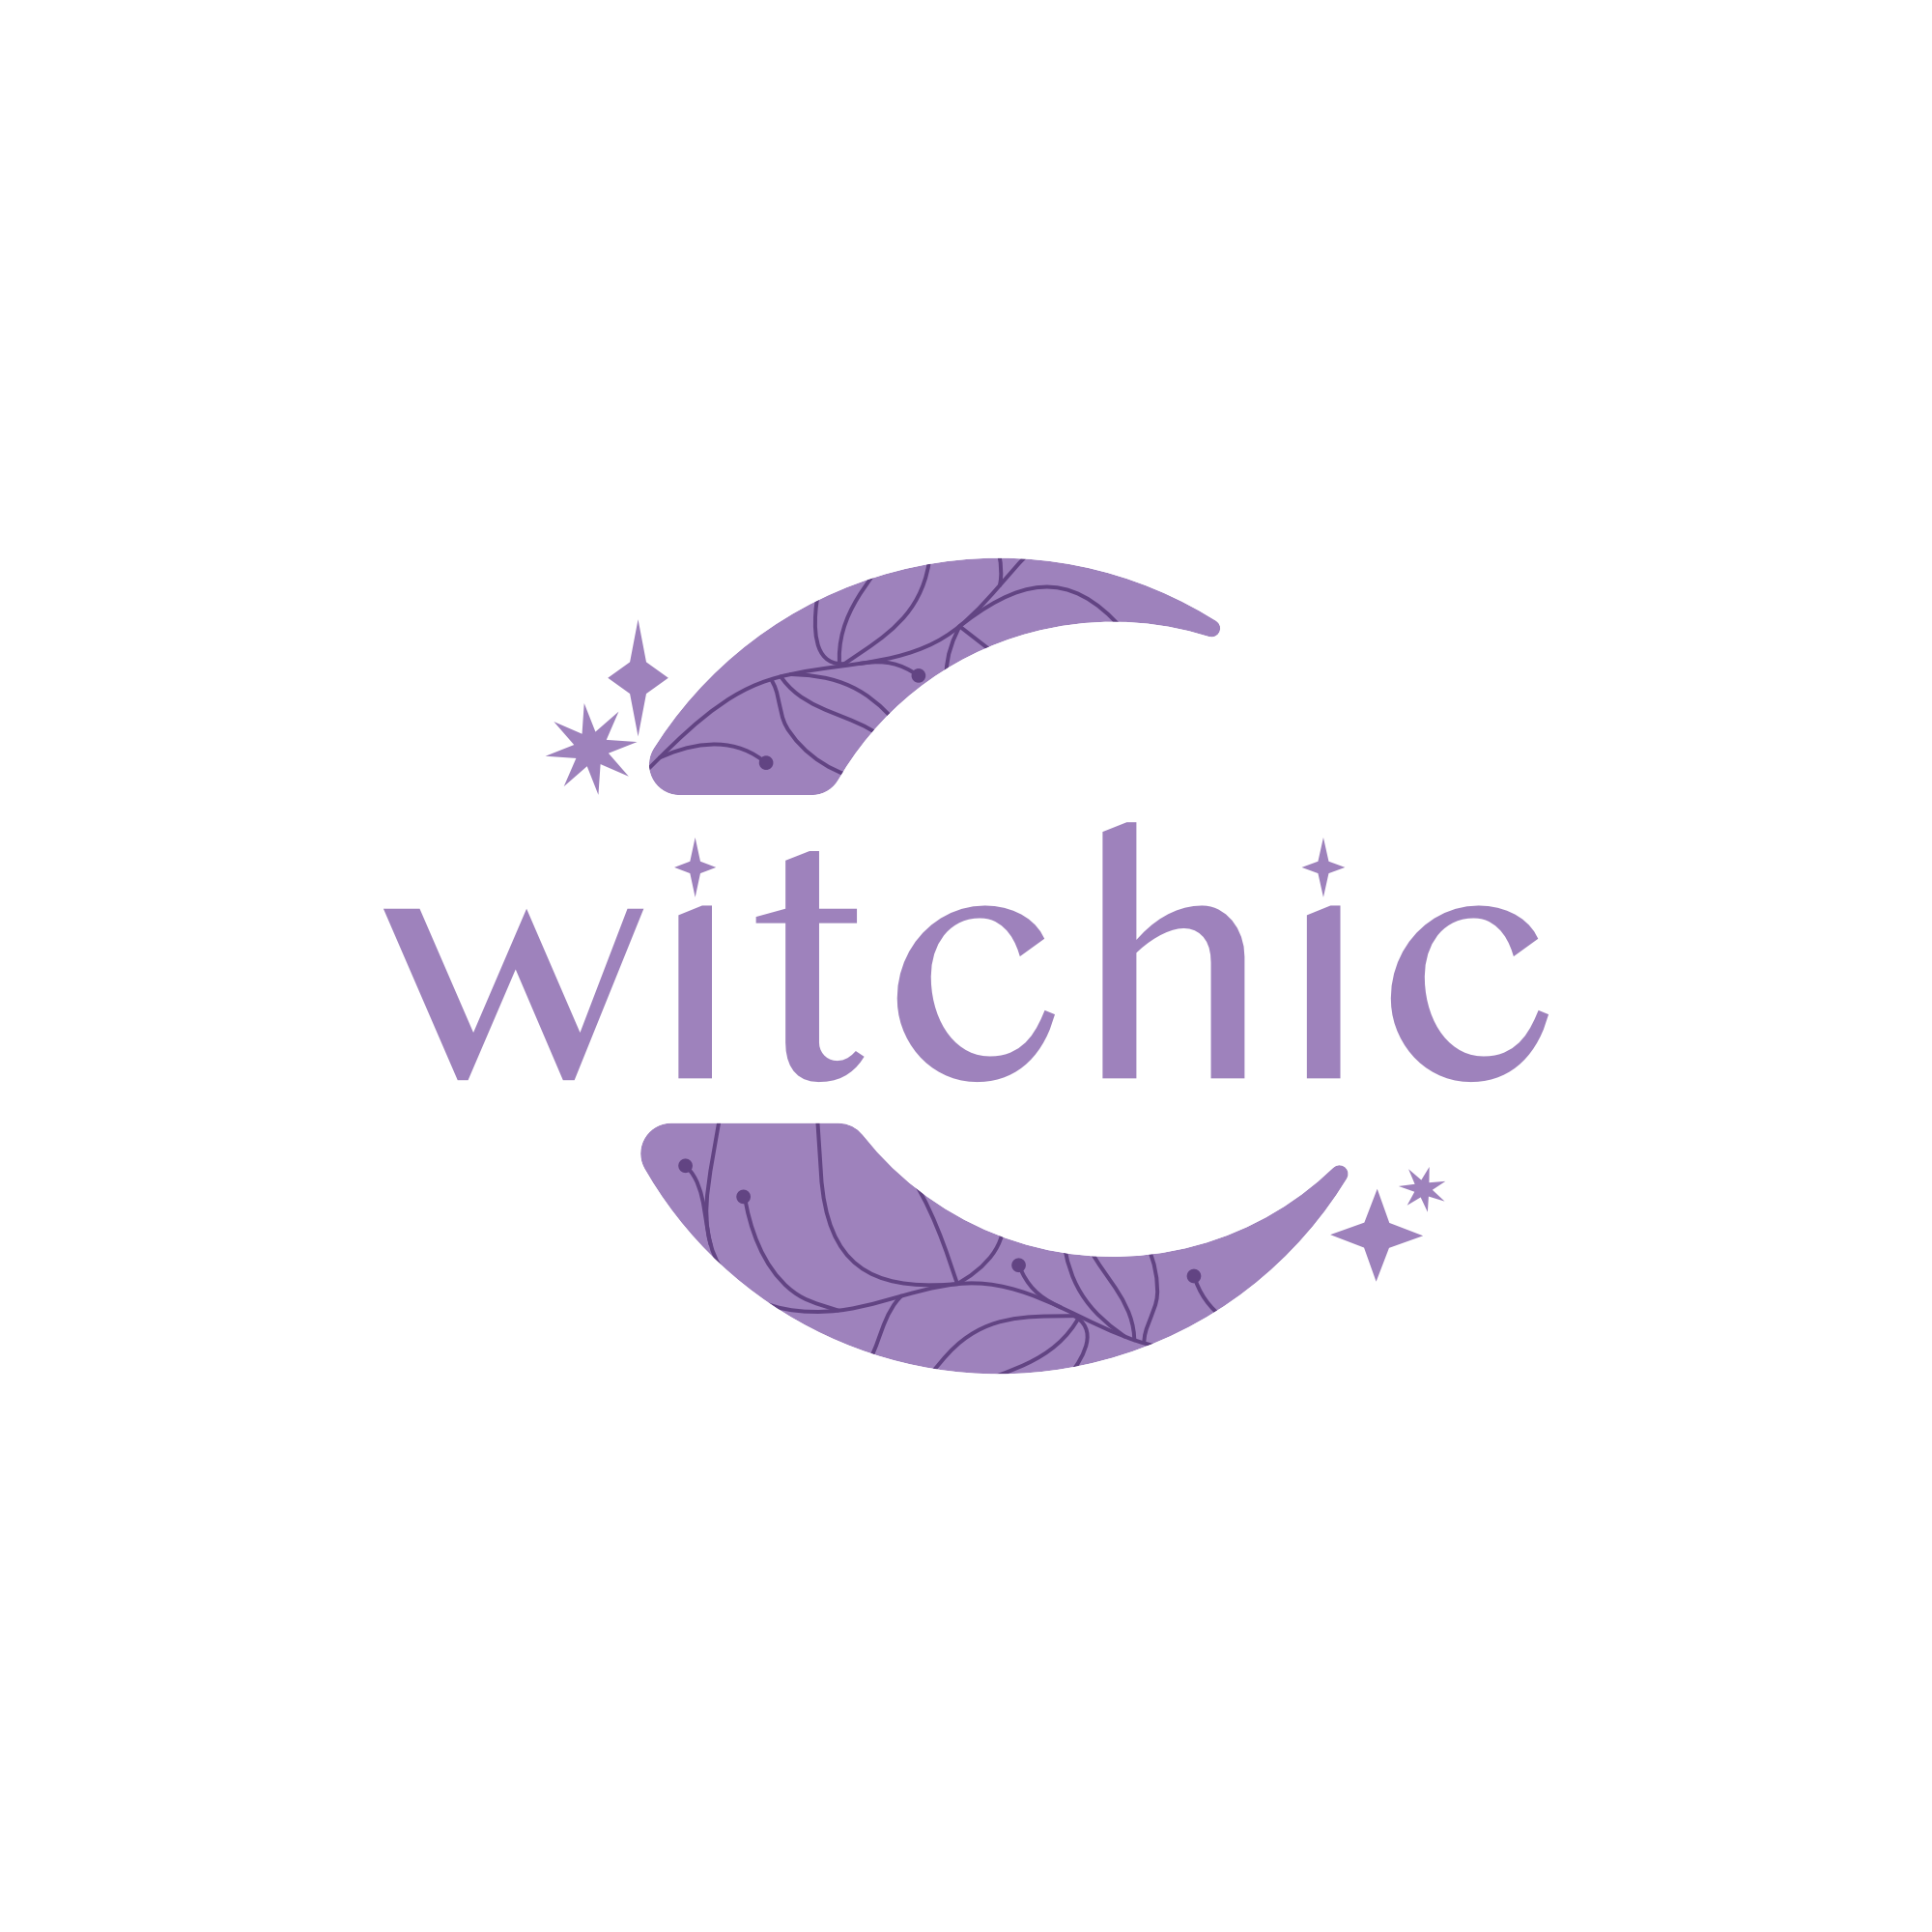 Witchic